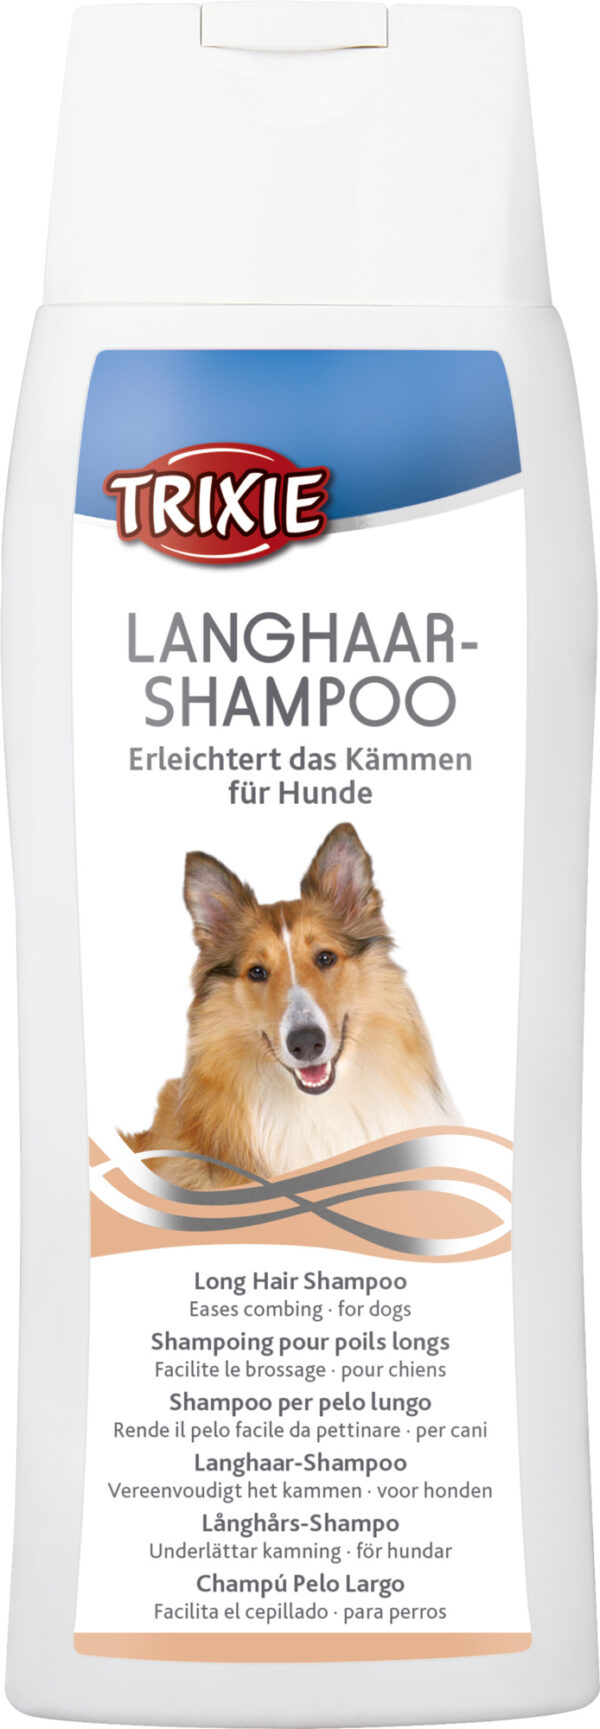 trixie-hygiene-pflegebedarf-langhaar-shampoo-2901-tierbedarf-bvl-shop